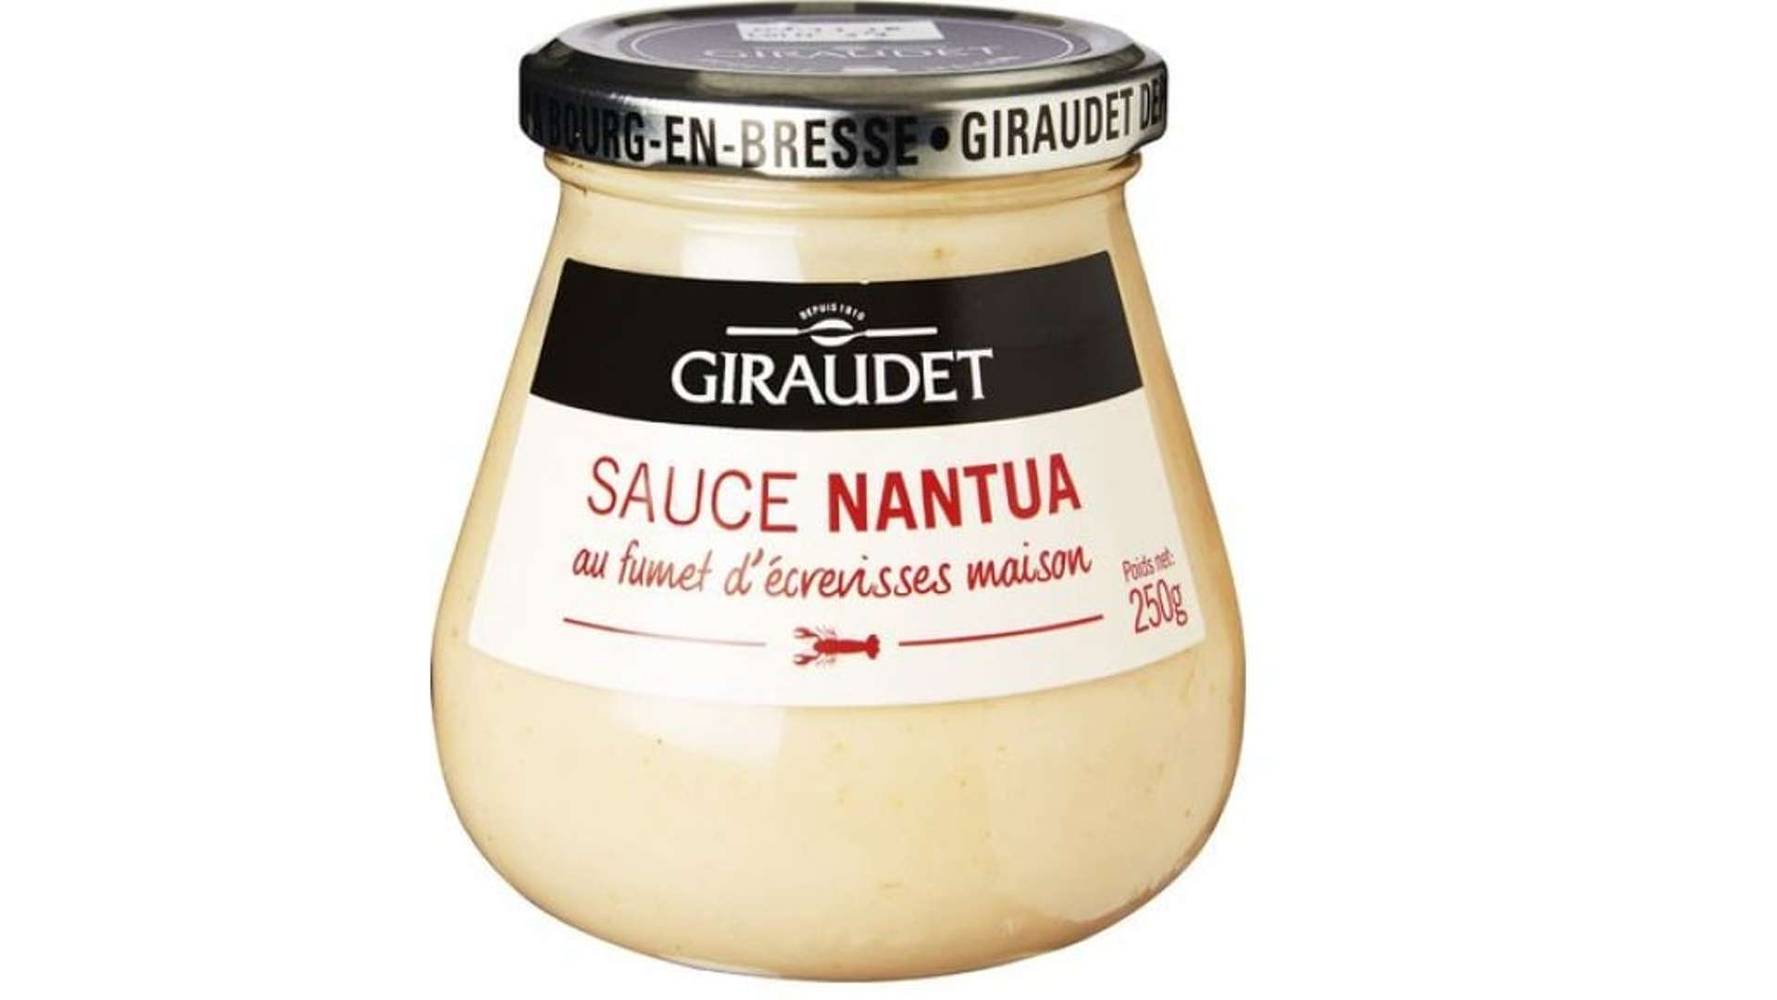 Giraudet - Sauce nantua